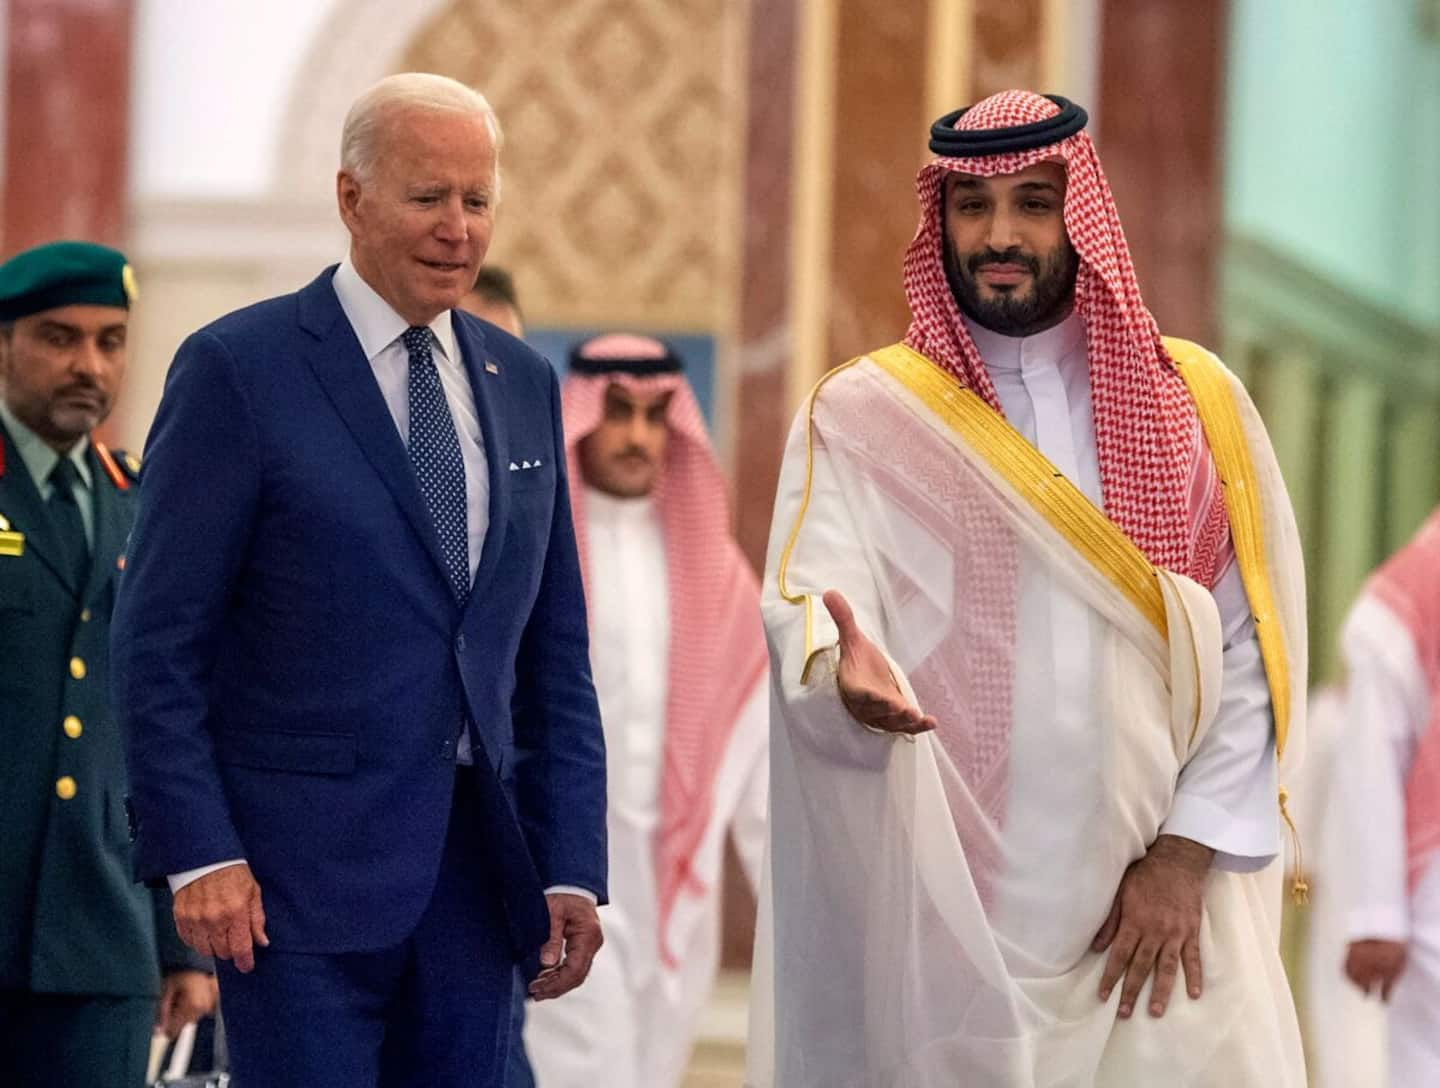 Biden in Saudi Arabia, seeking oil and normalization with Israel